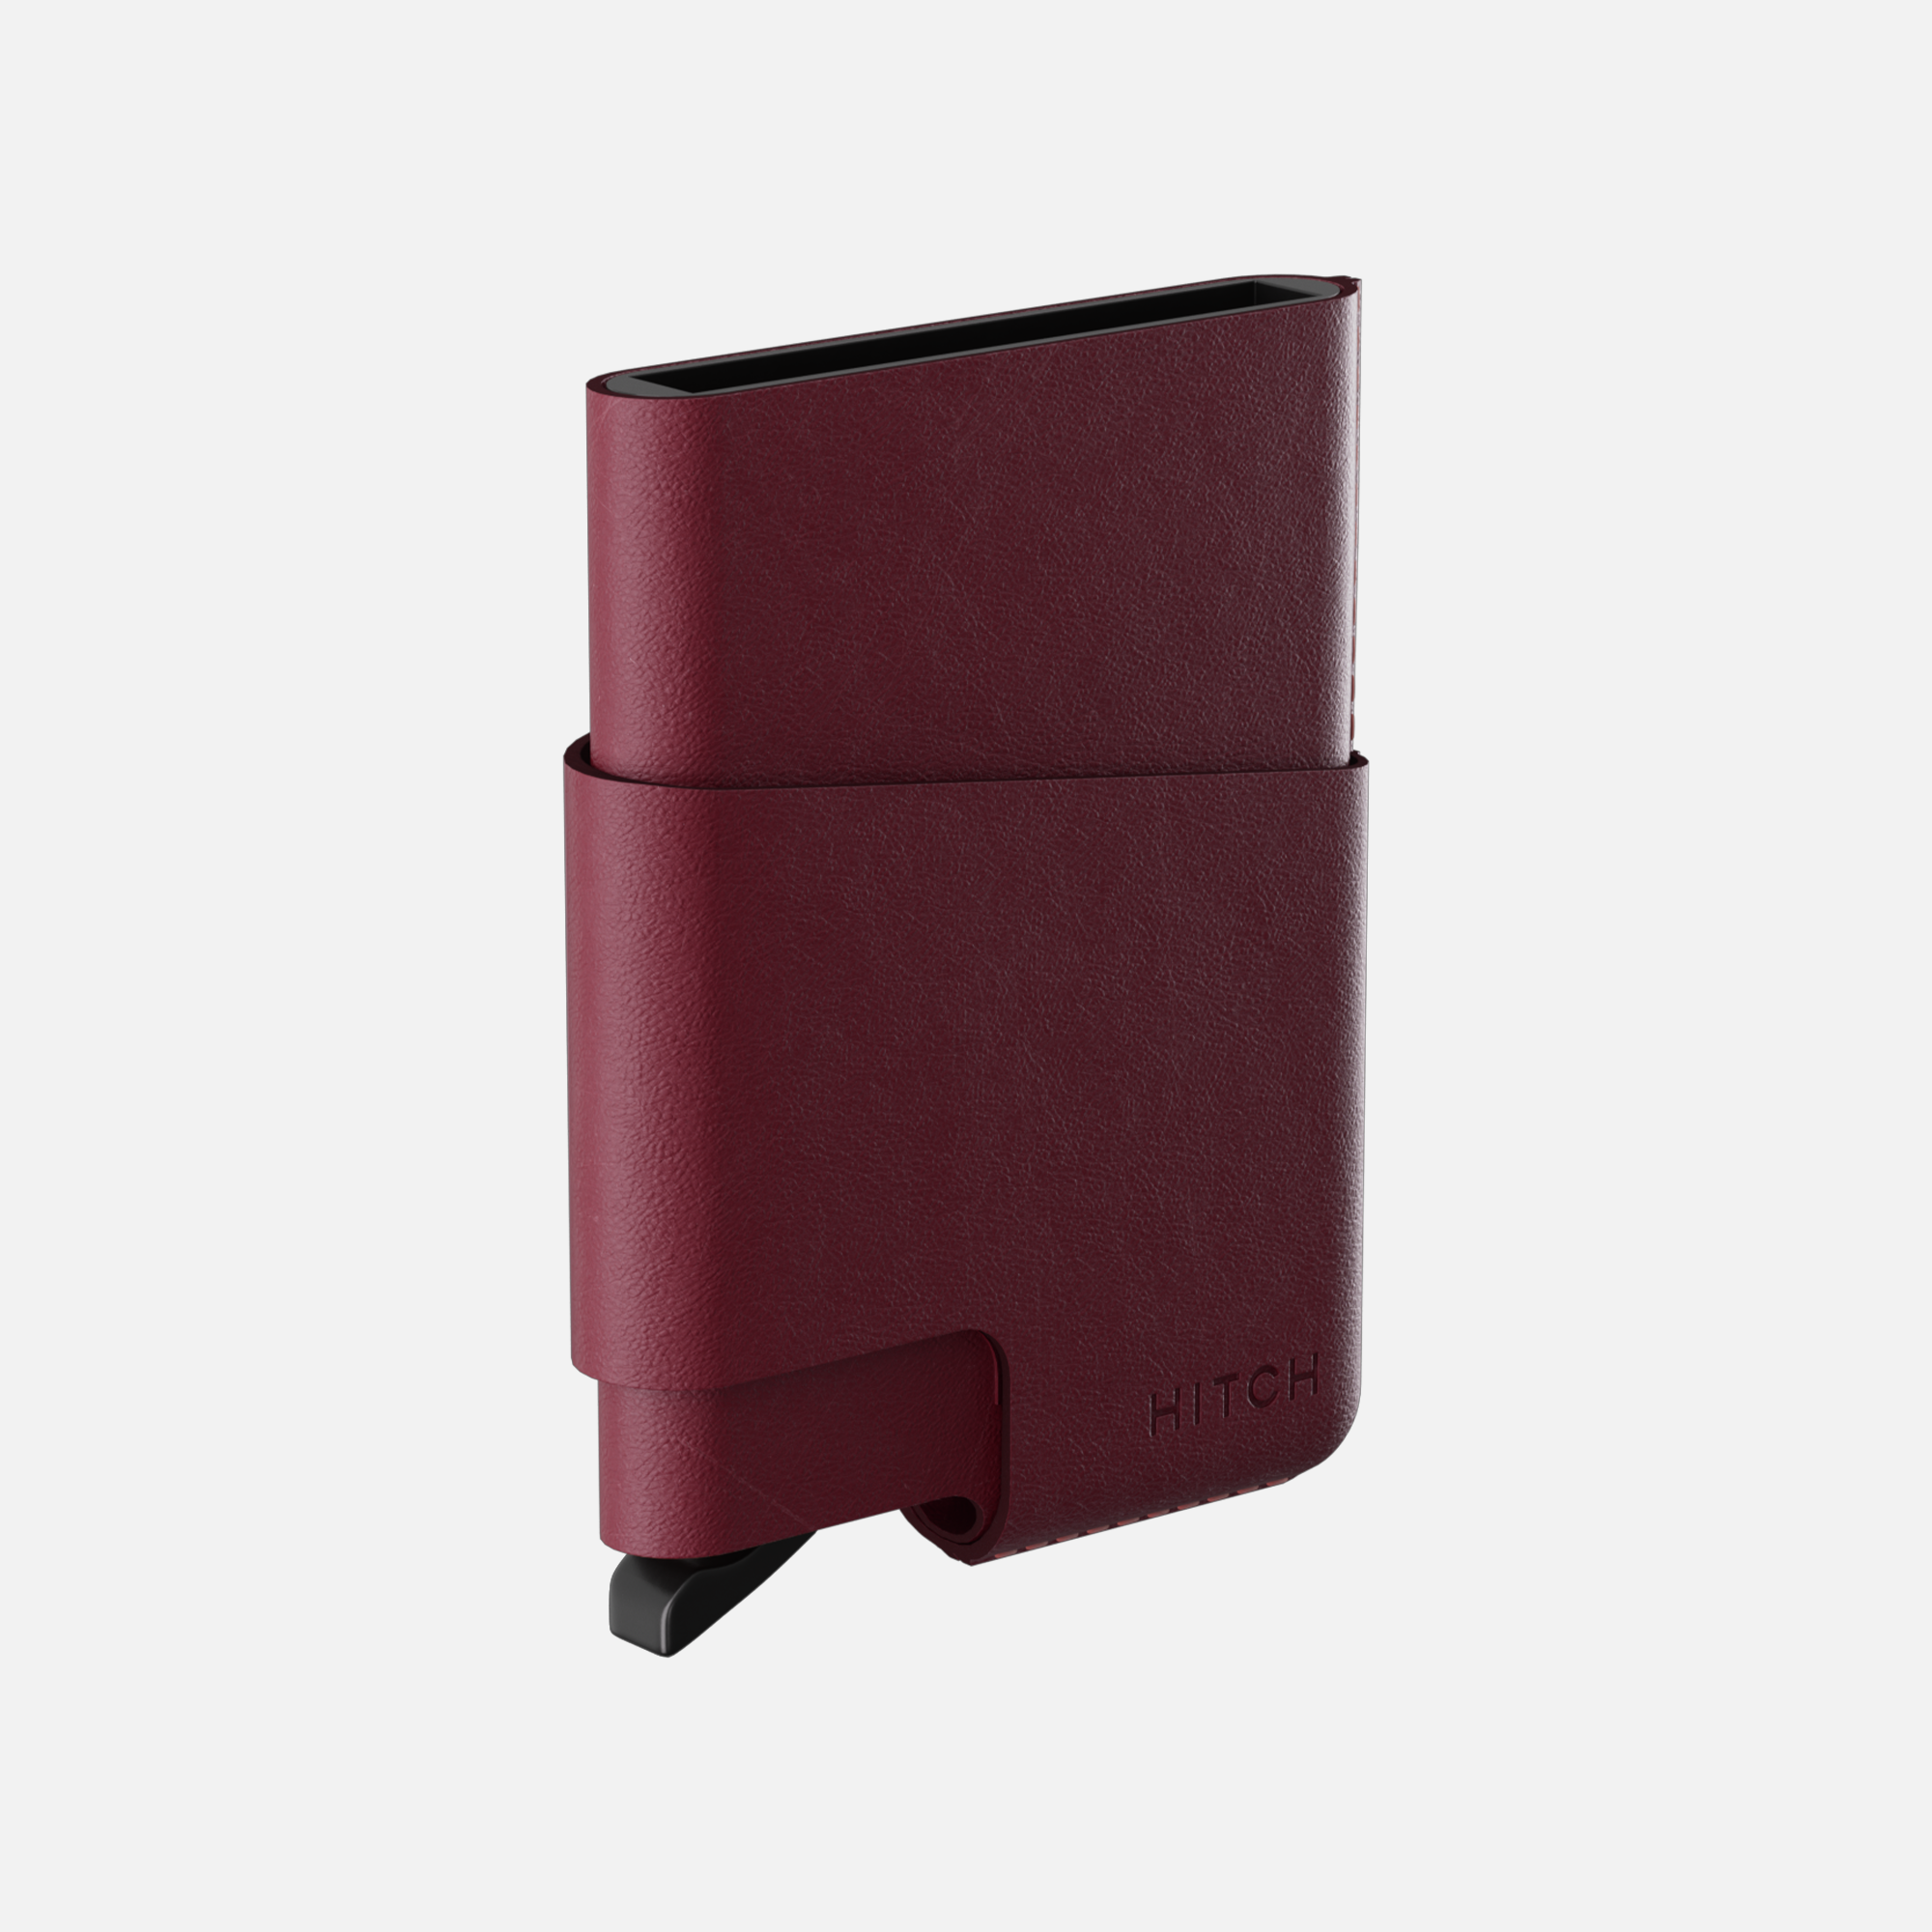 Burgundy Hitch leather cardholder wallet, minimalist design, against a white background.